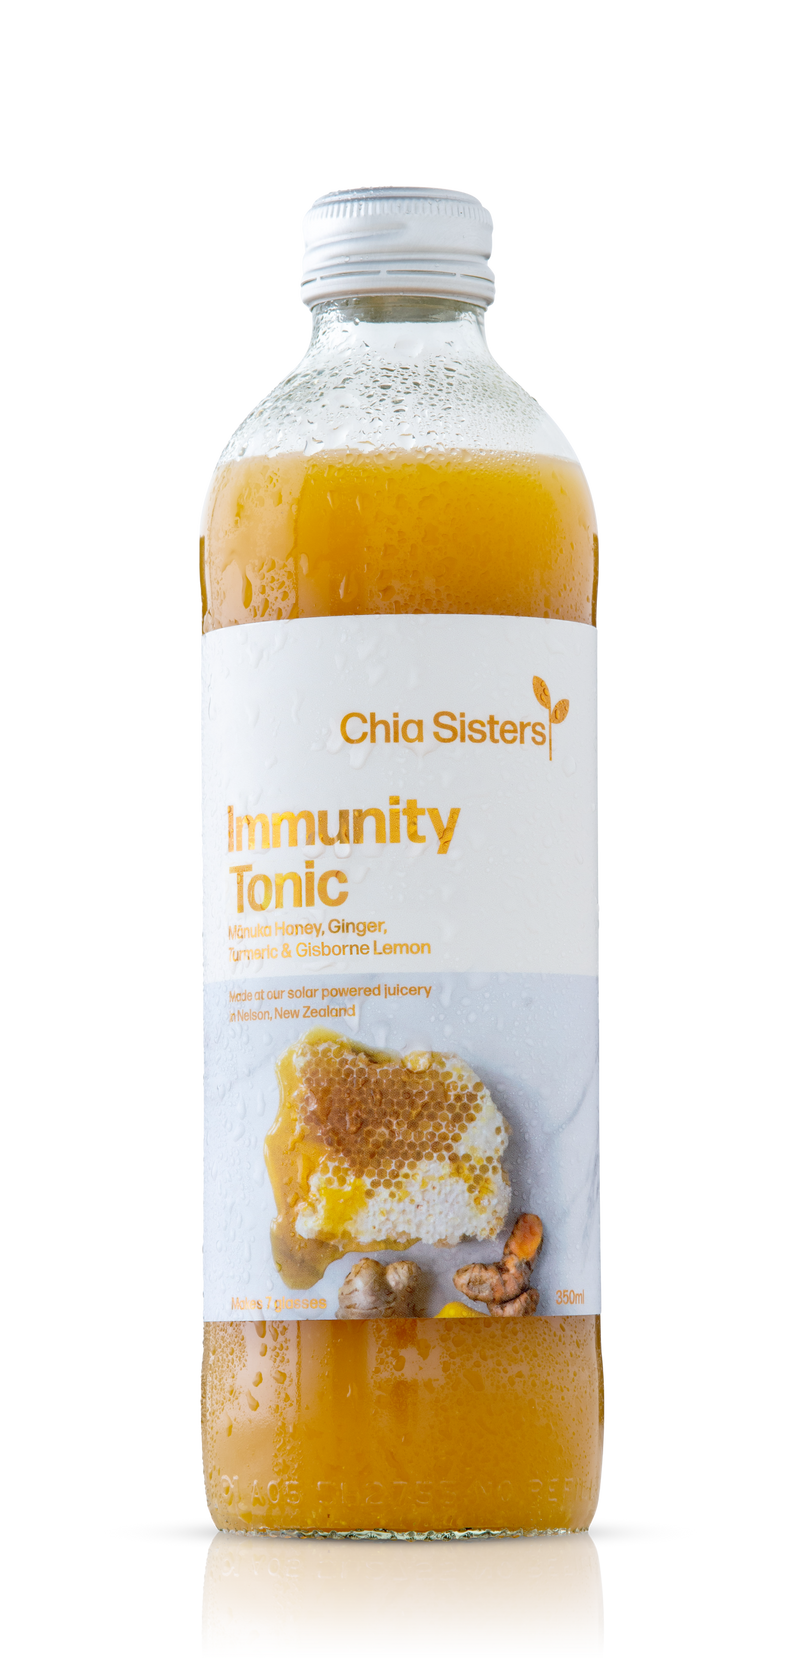 Immunity Hot Tonic - Honey, Ginger, Turmeric & Lemon - Slowood